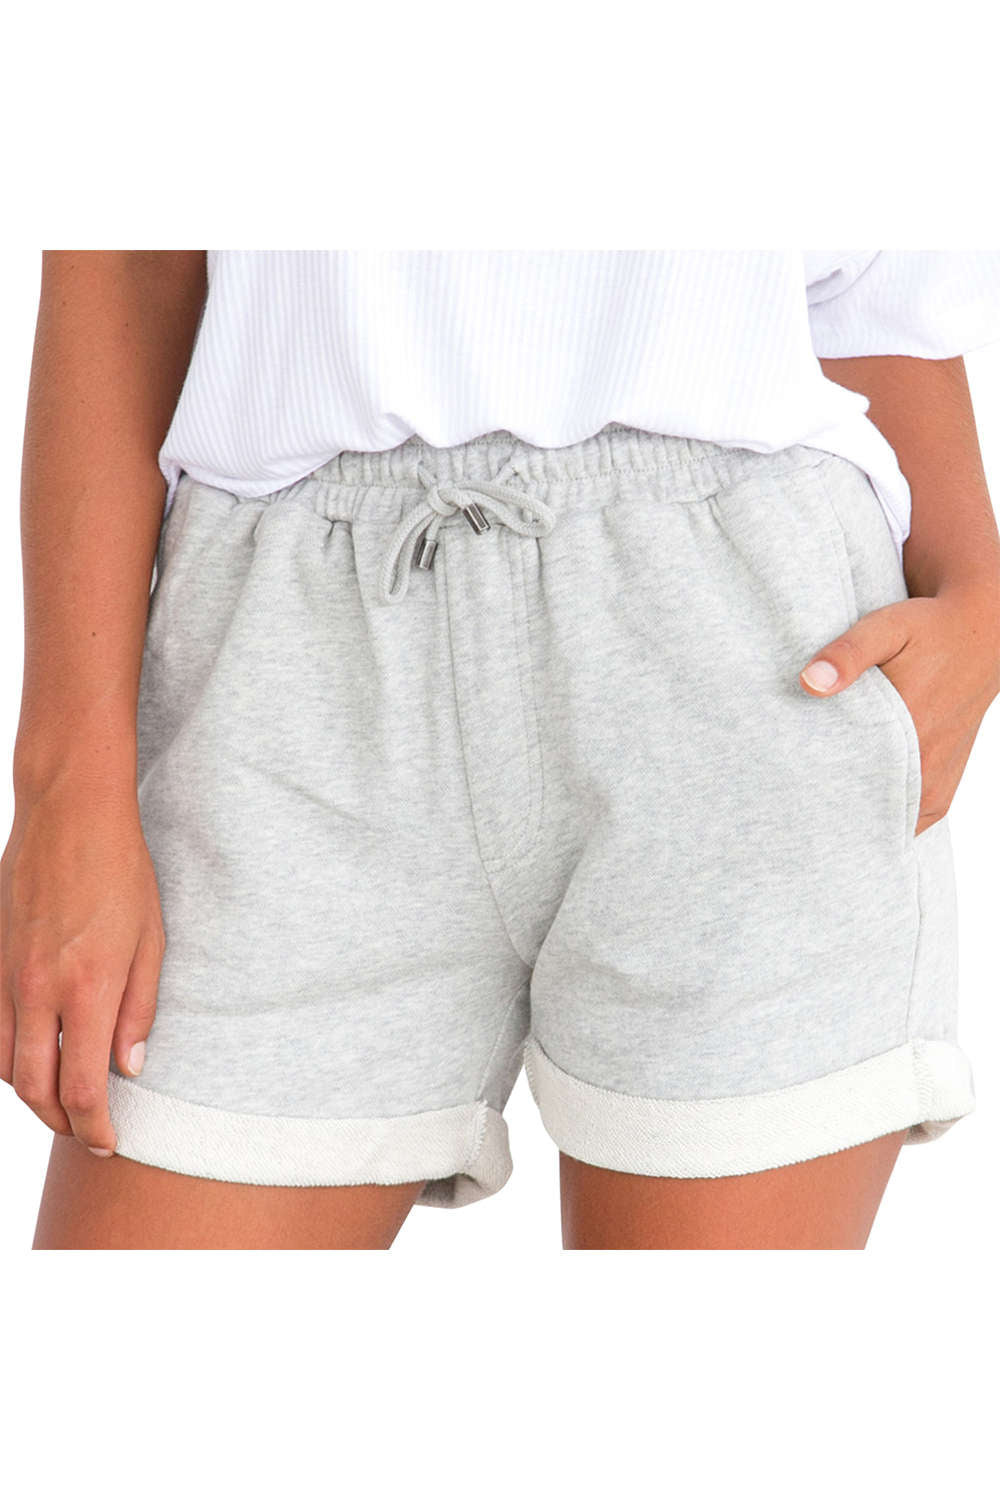 Iyasson Women's Cotton Stretch Activewear Lounge Shorts